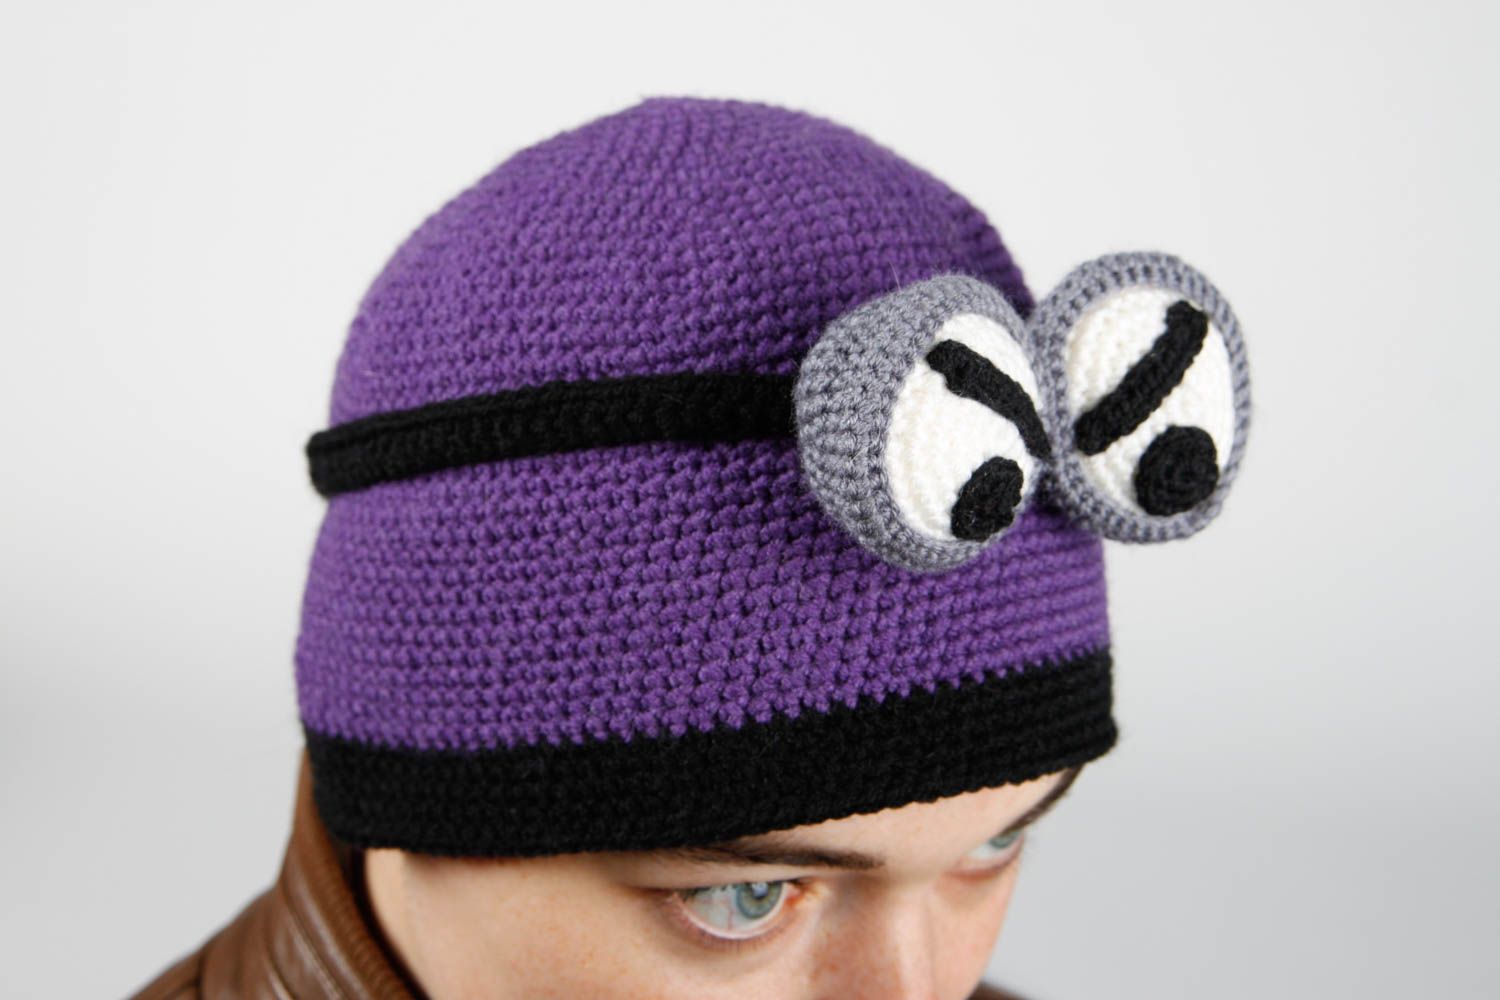 Handmade knitted hat designer winter hat winter accessories hand-knitted hat photo 2